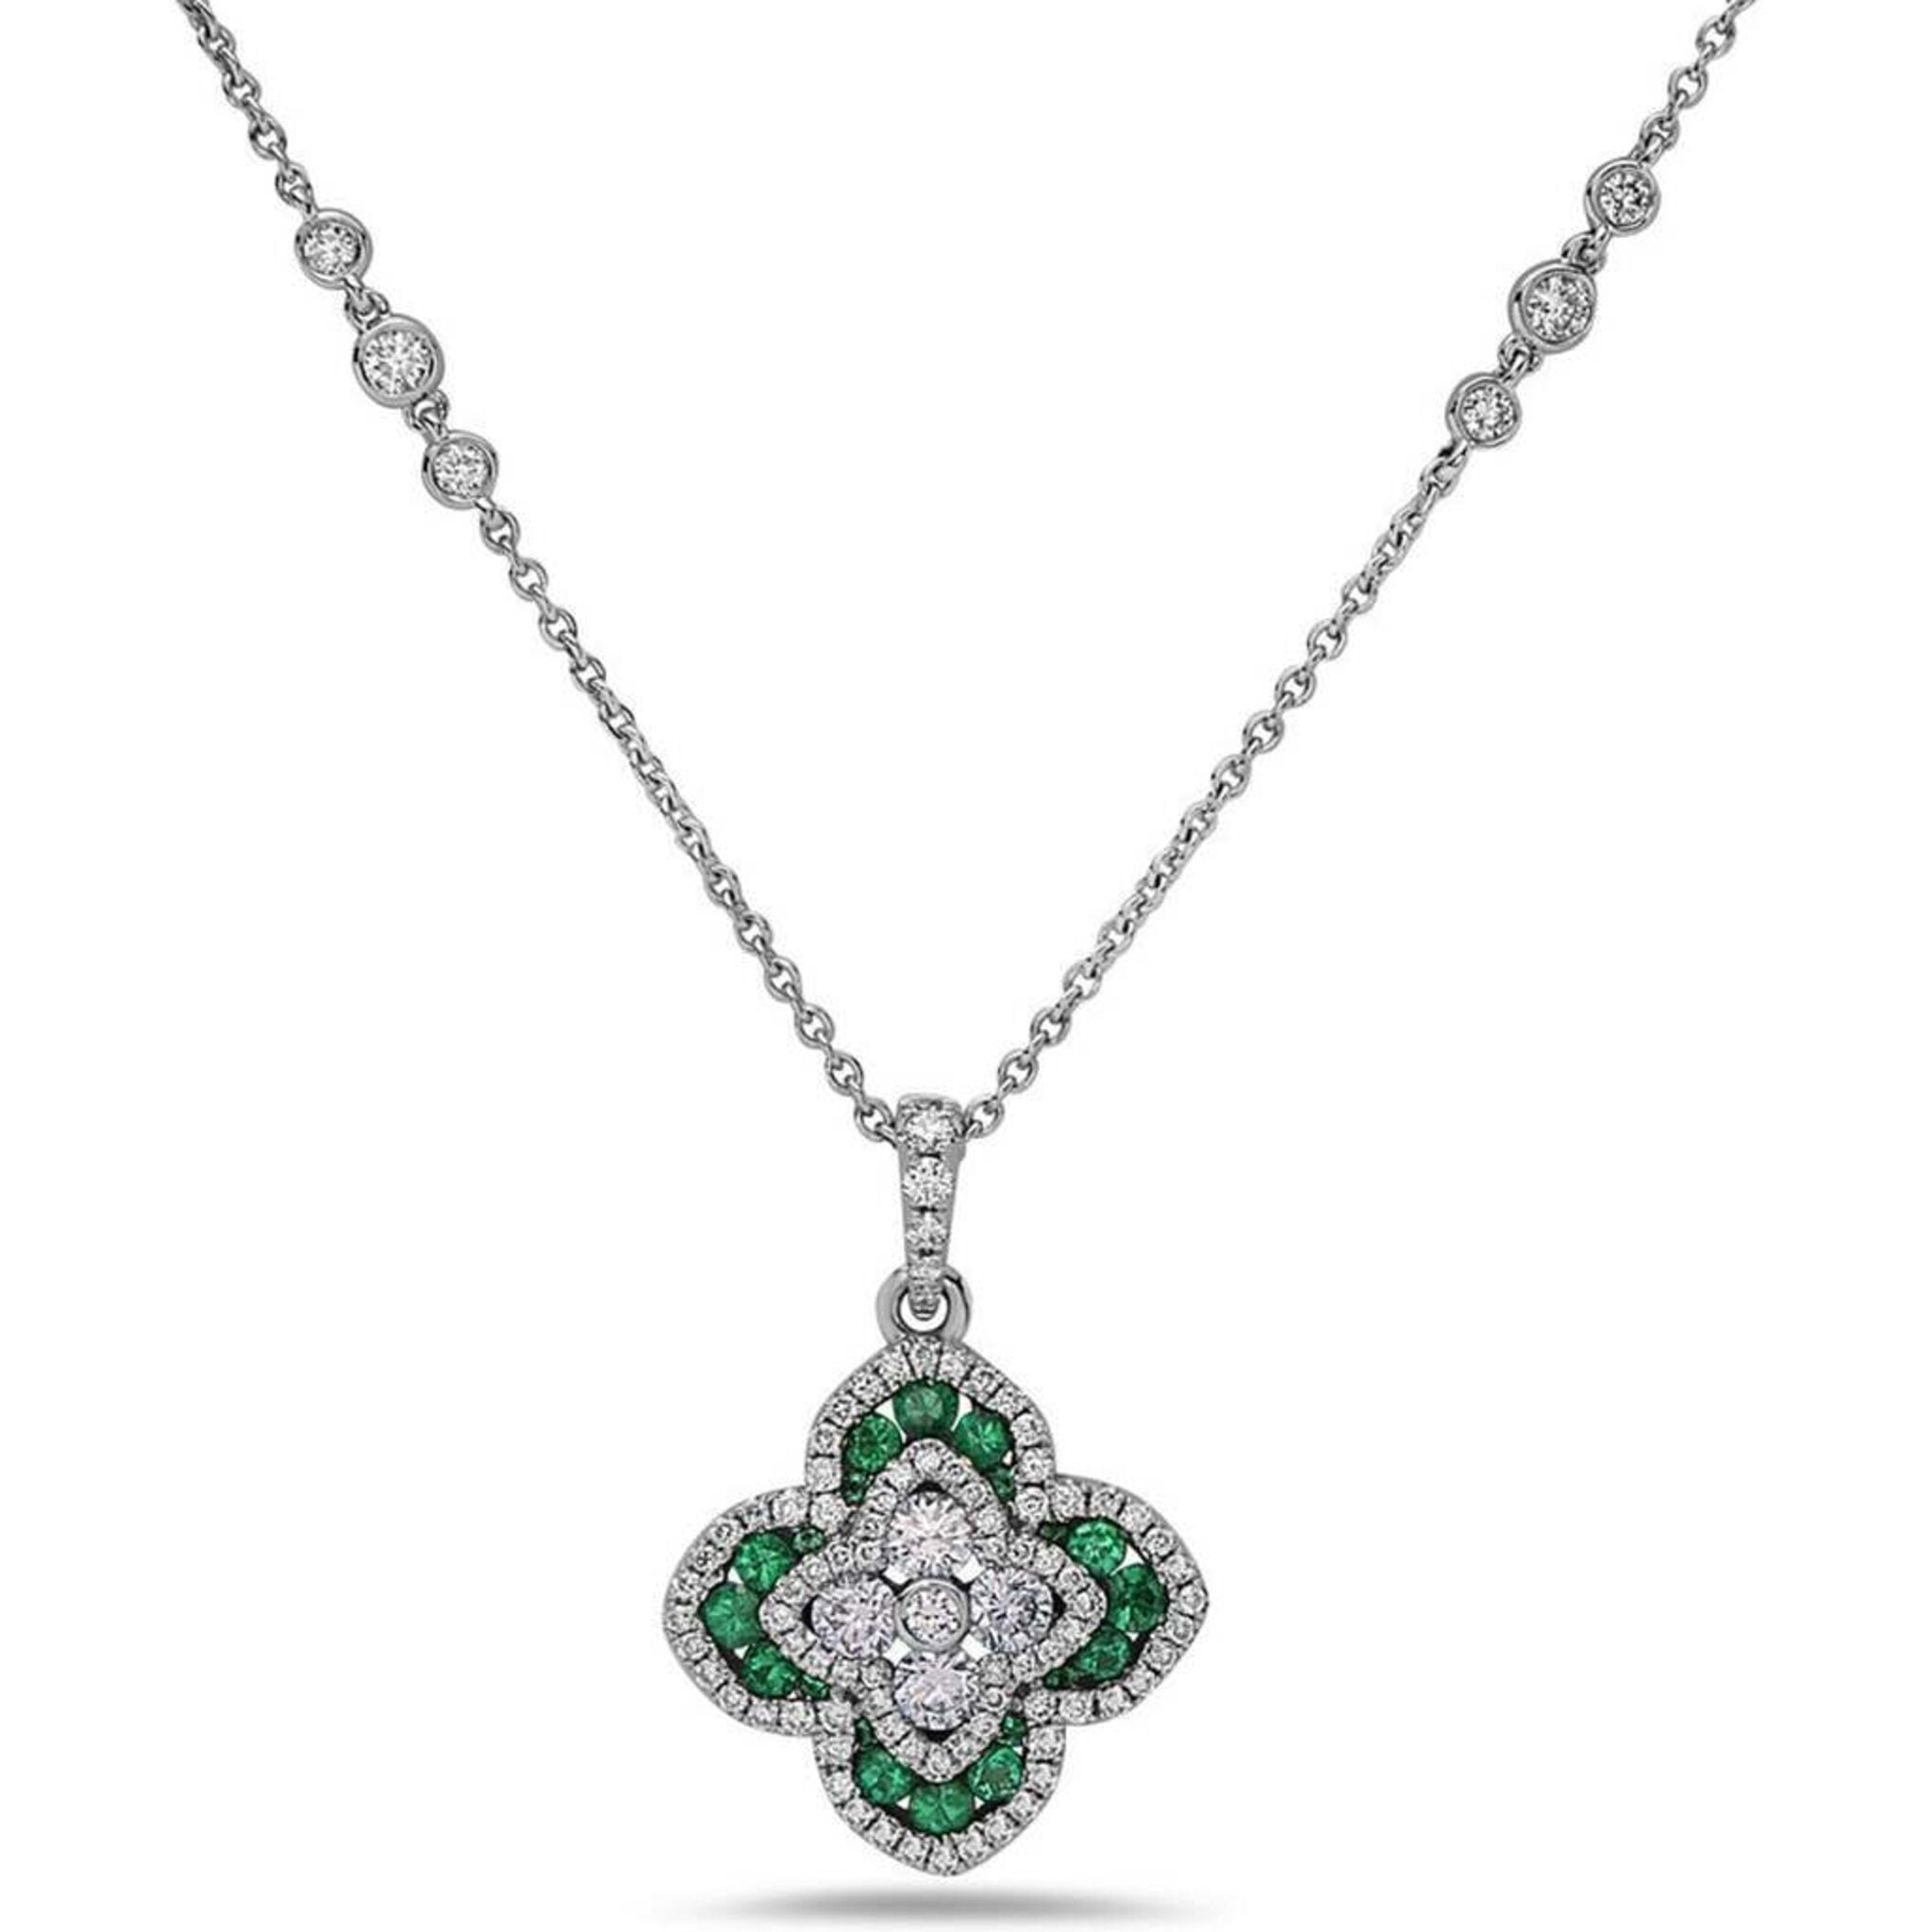 Charles Krypell - Quatrefoil Diamond Necklace - Emerald